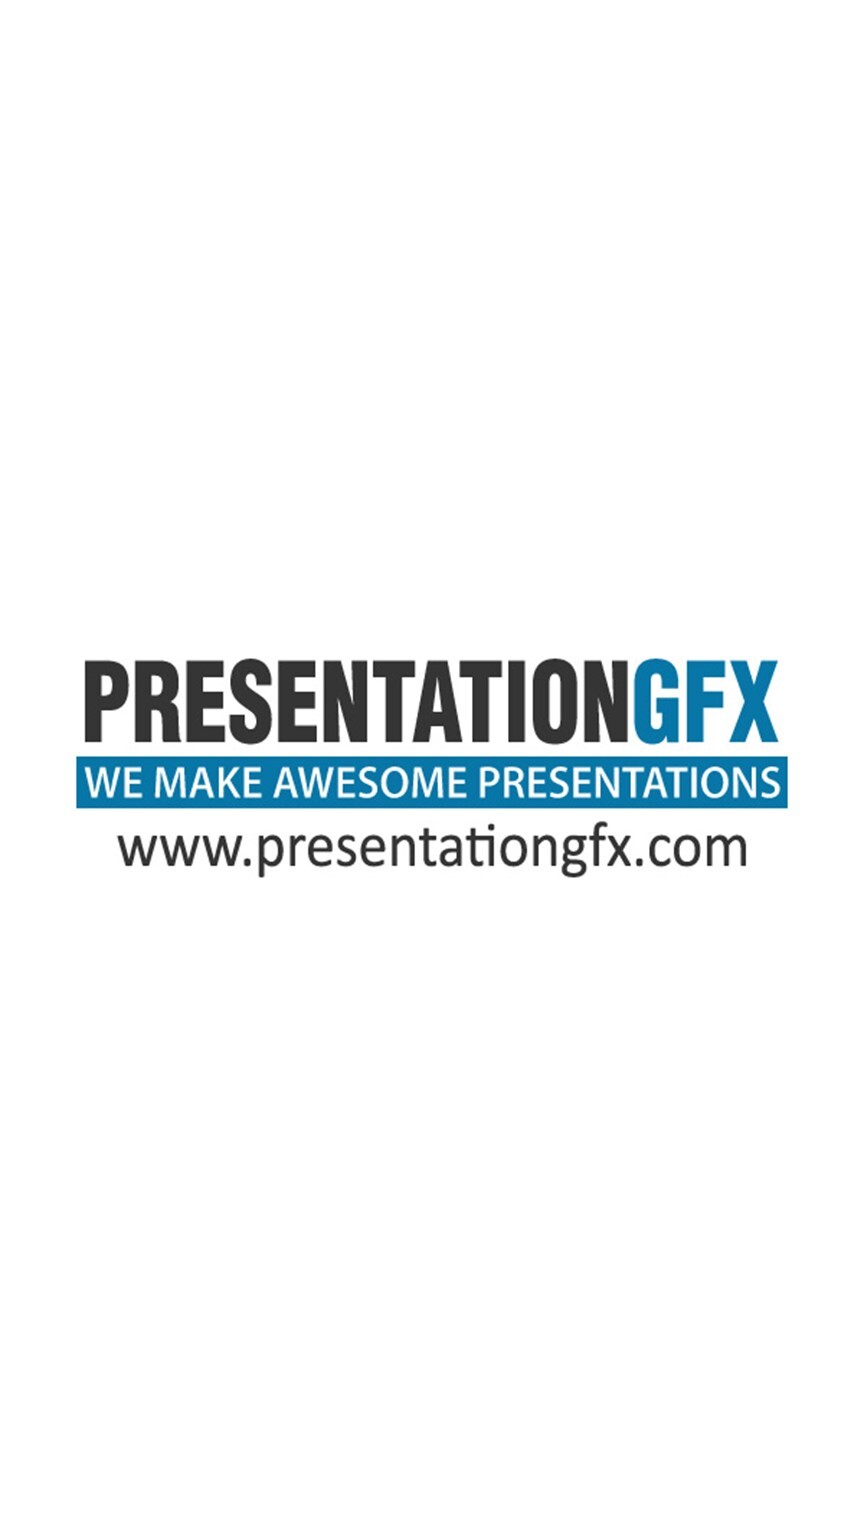 PresentationGFX- Presentation Design Services